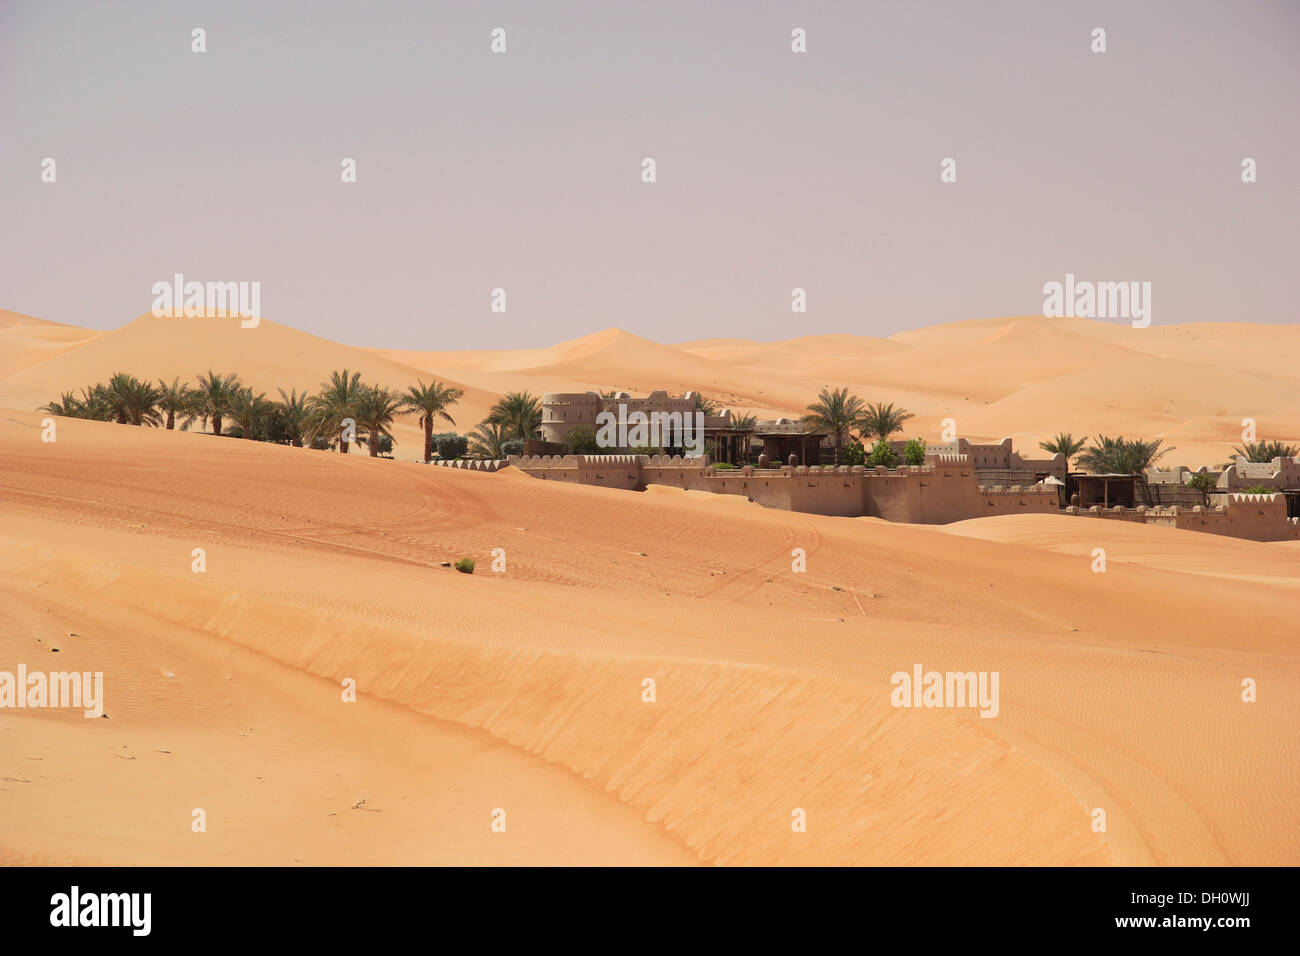 Desert luxury hotel Anantara Qasr Al Sarab, hotel resort built in the ...